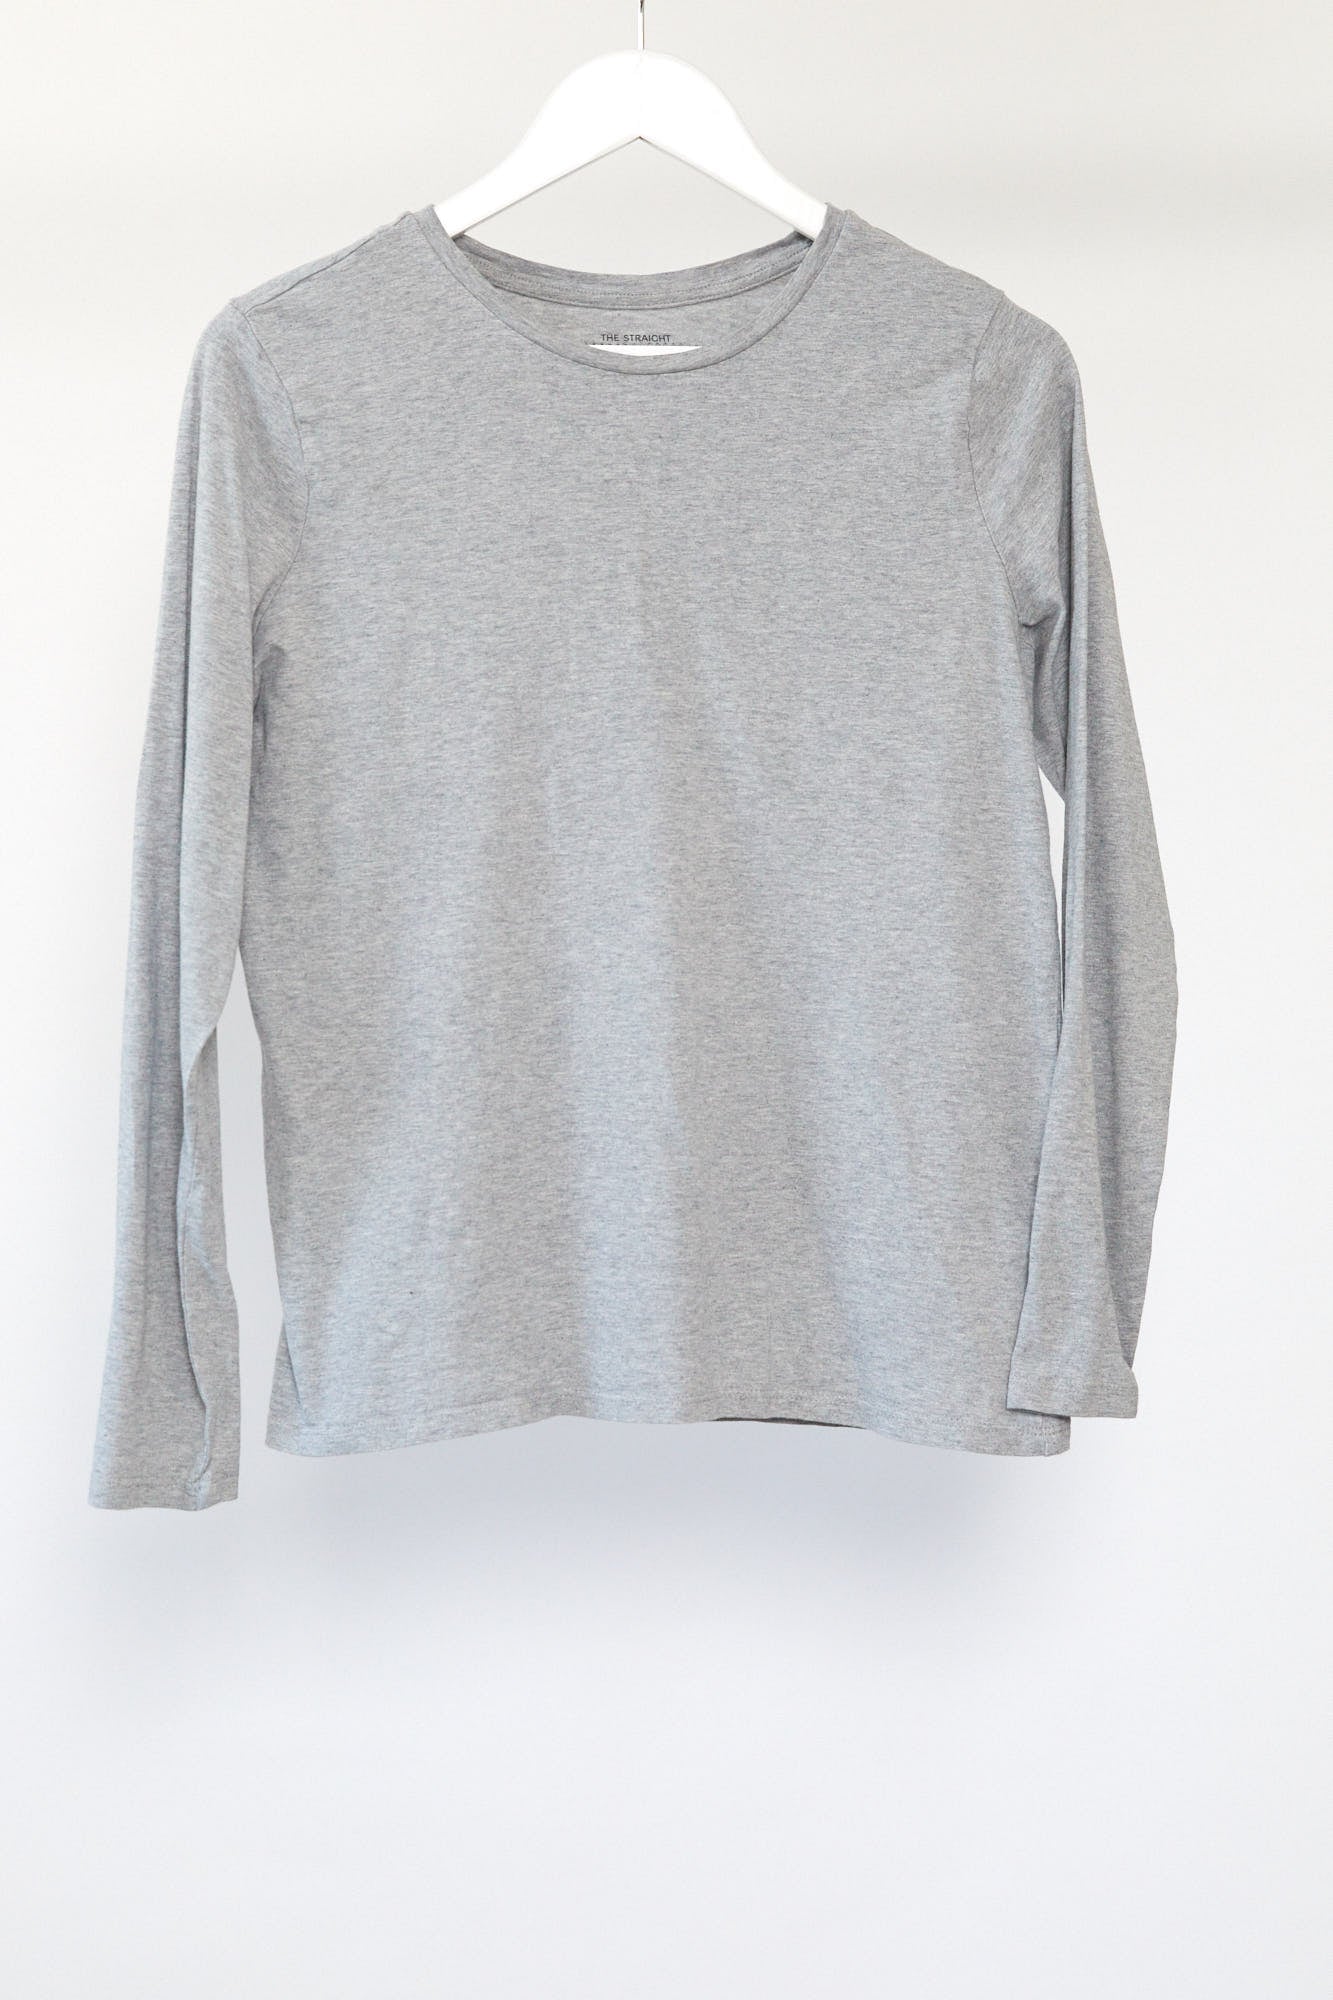 Womens Grey long sleeve T-shirt size small